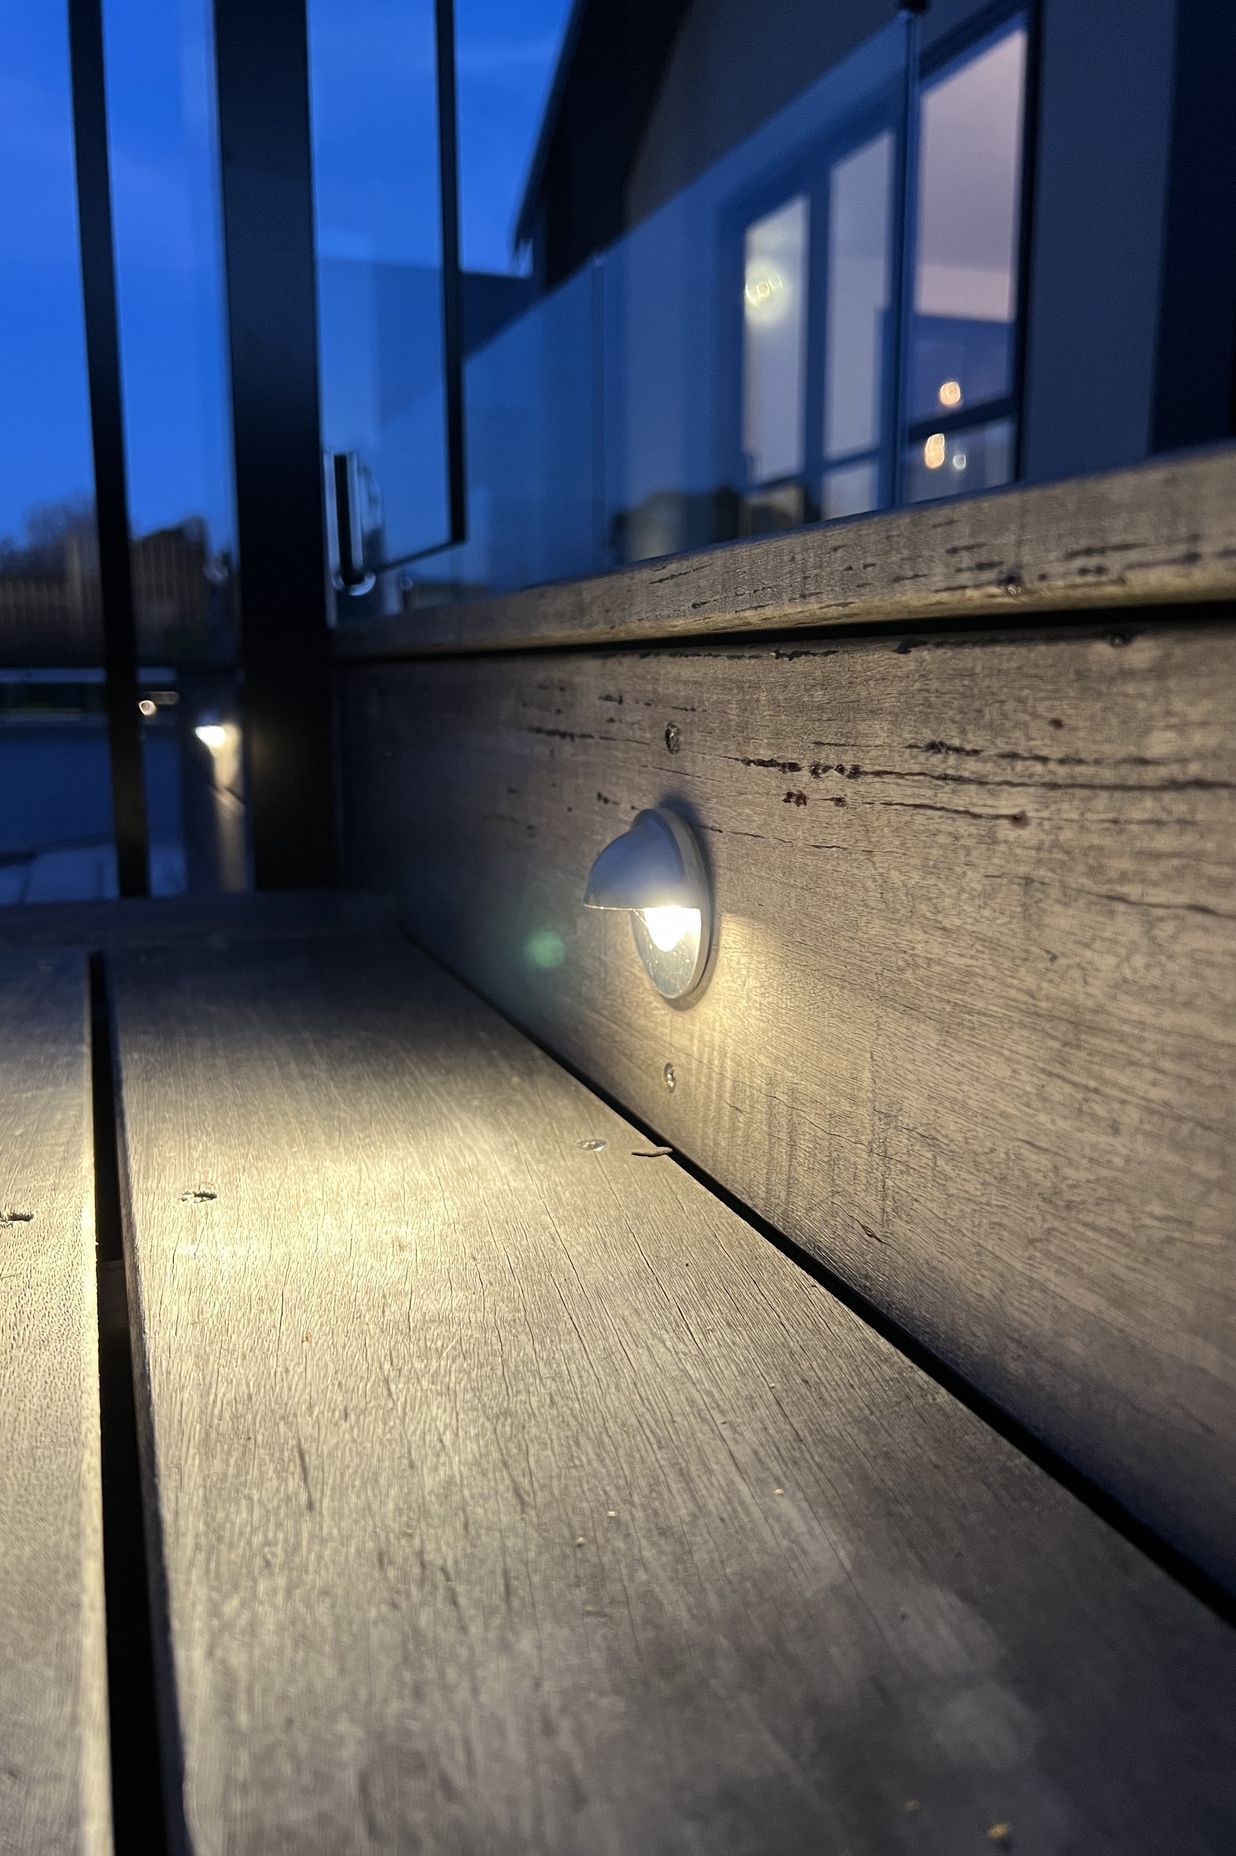 Subtle lighting can help wayfinding outdoors.